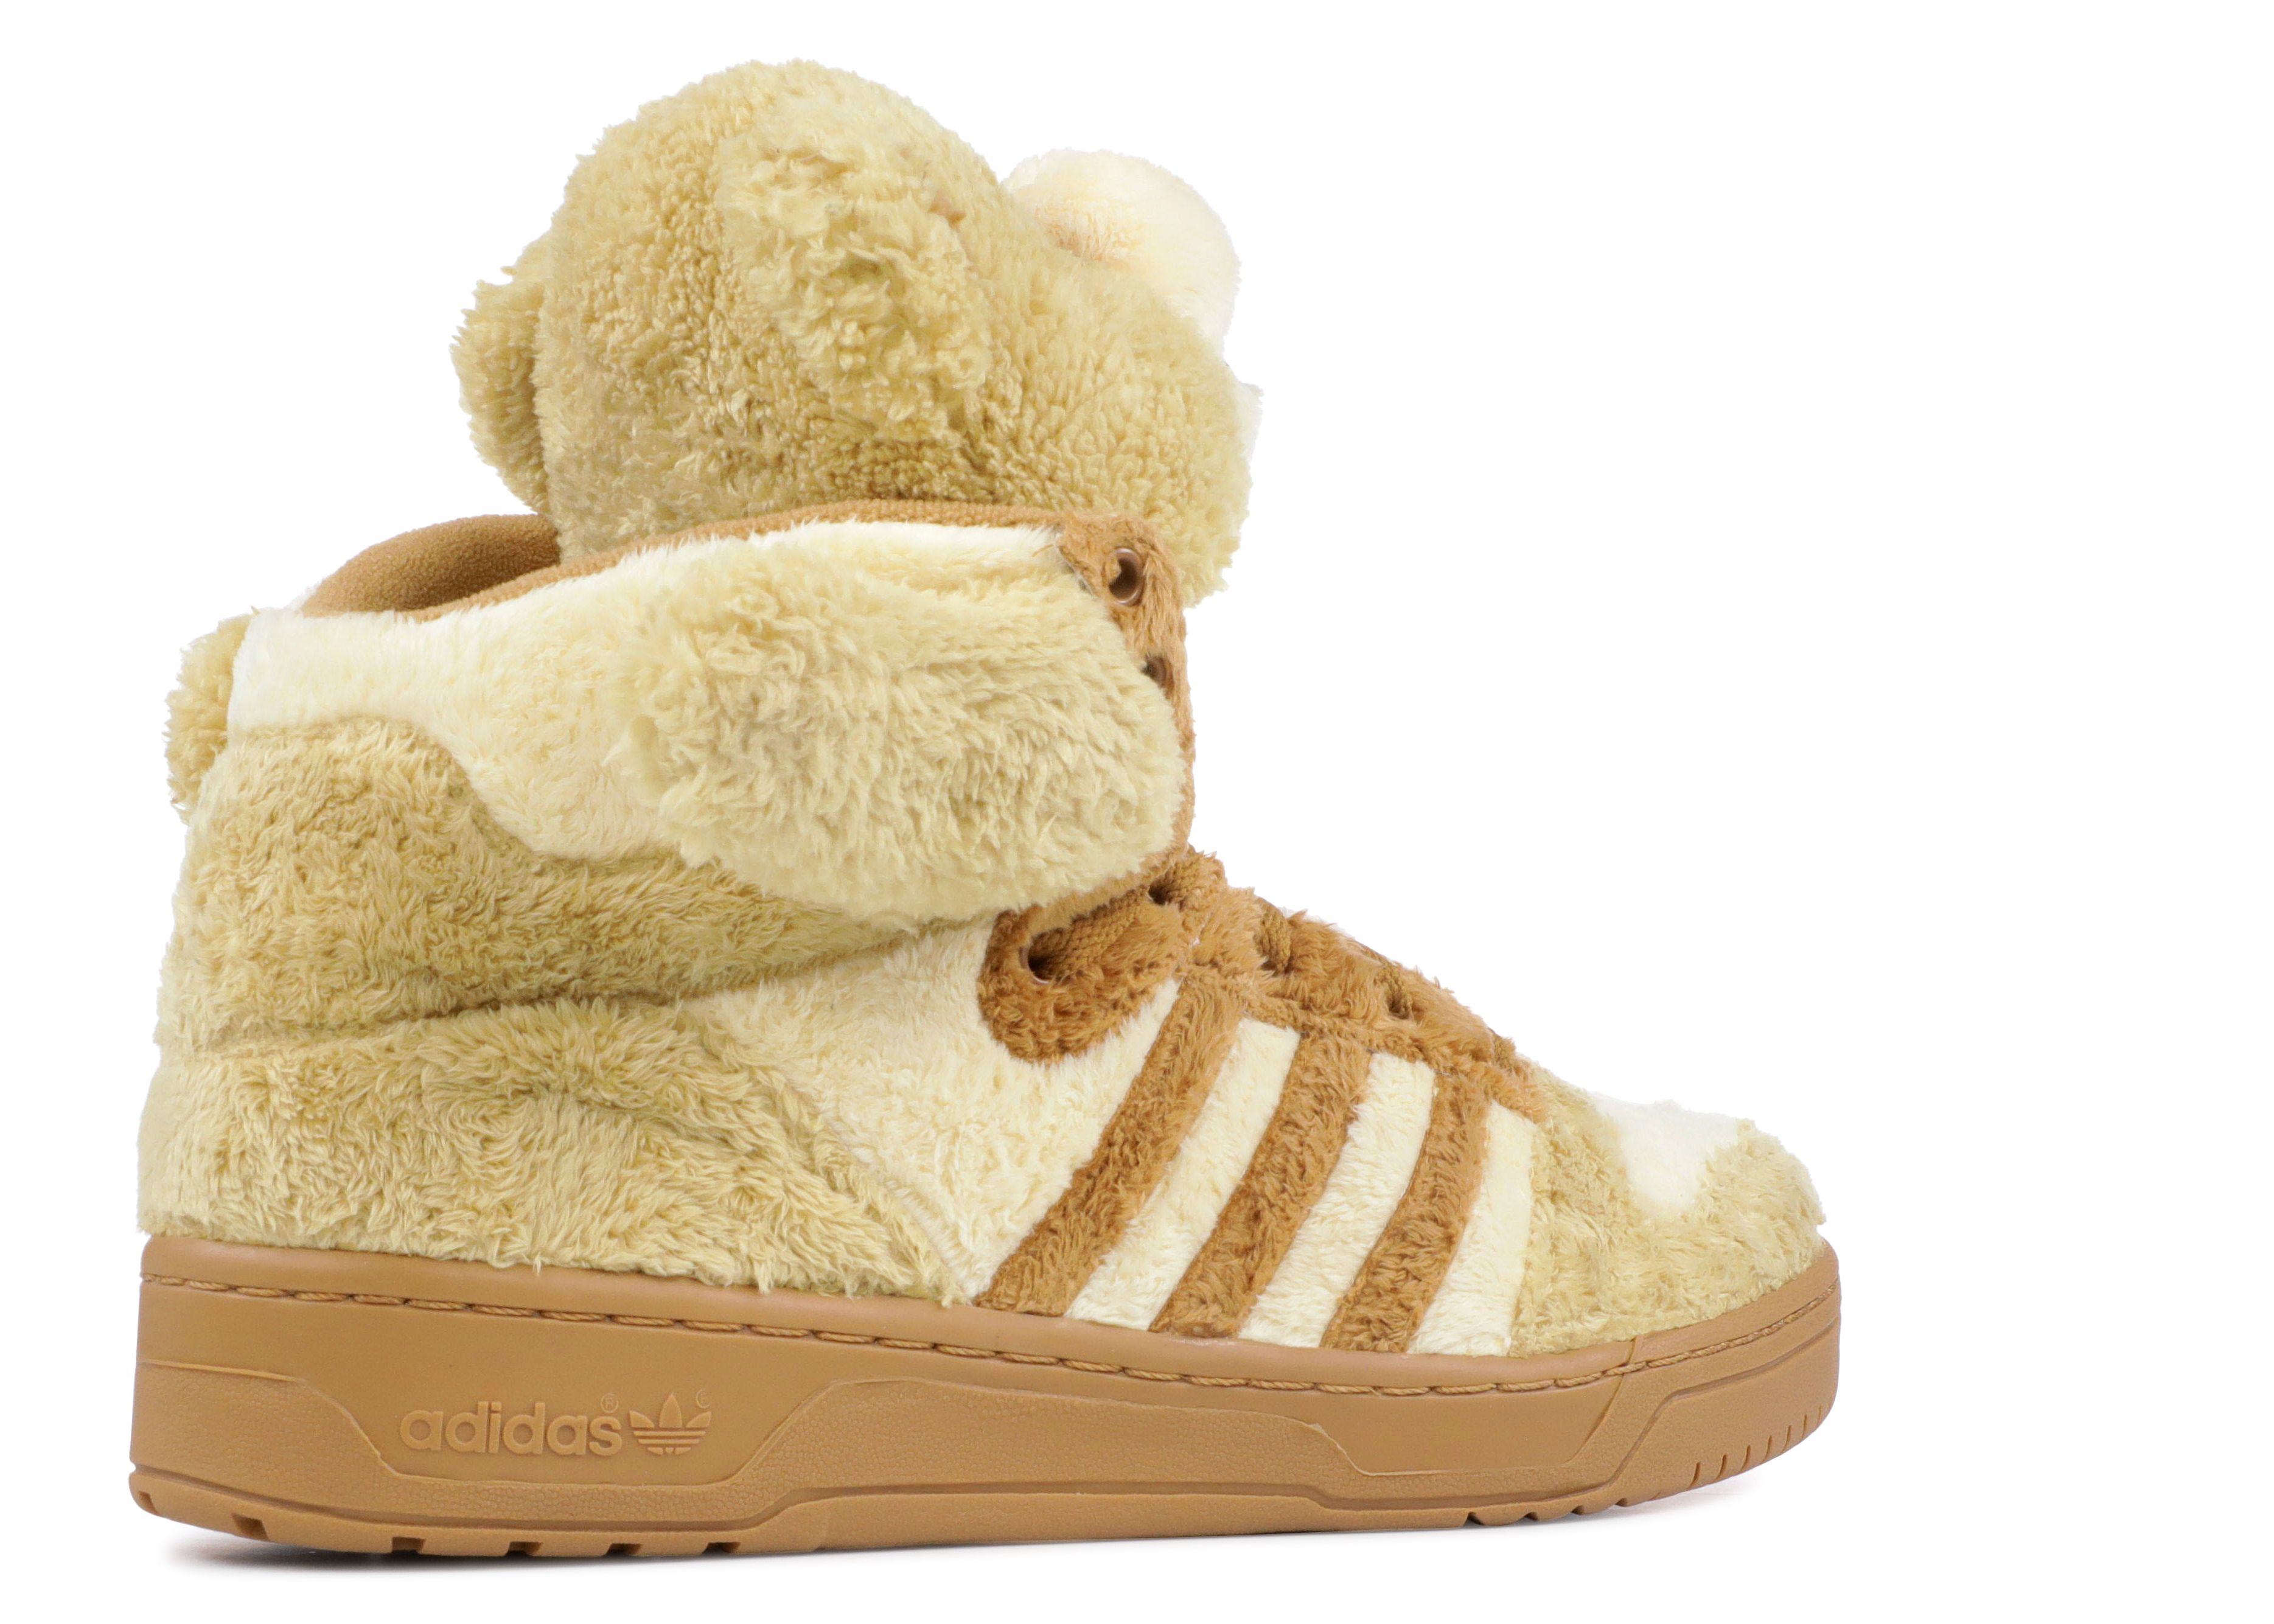 adidas stuffed animal shoes